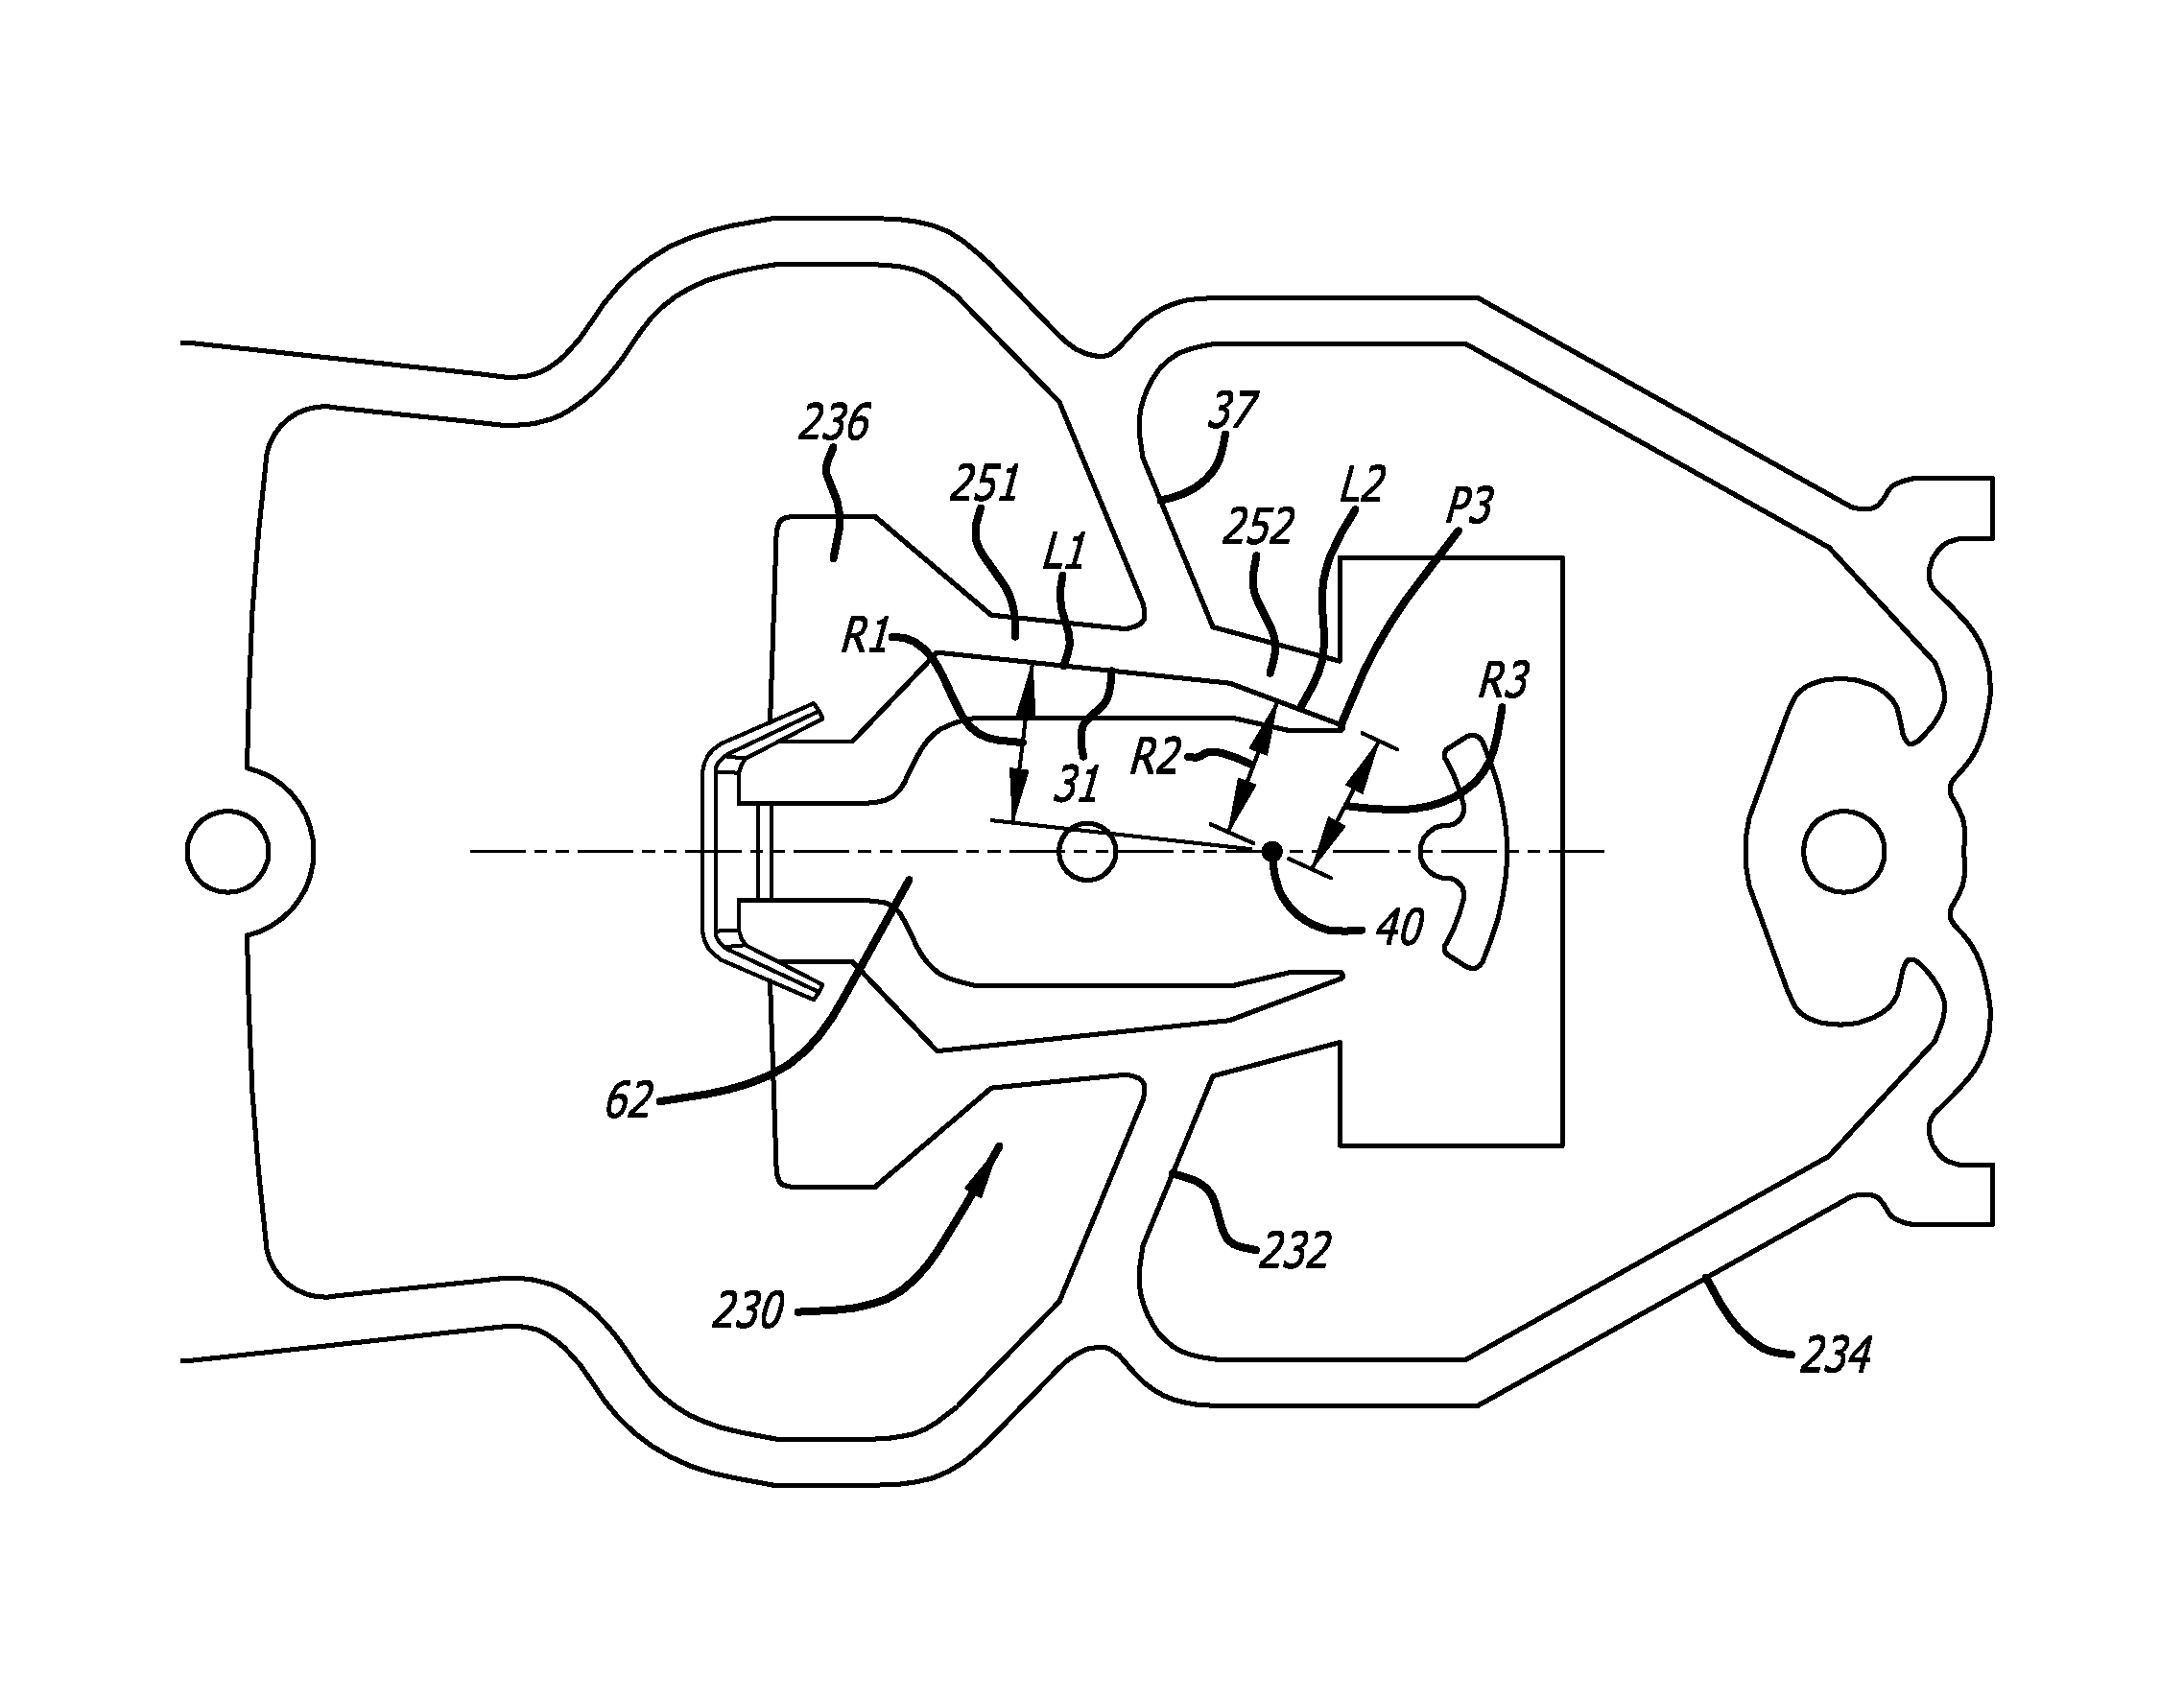 GSA suspension with microactuators extending to gimbal through flexible connectors